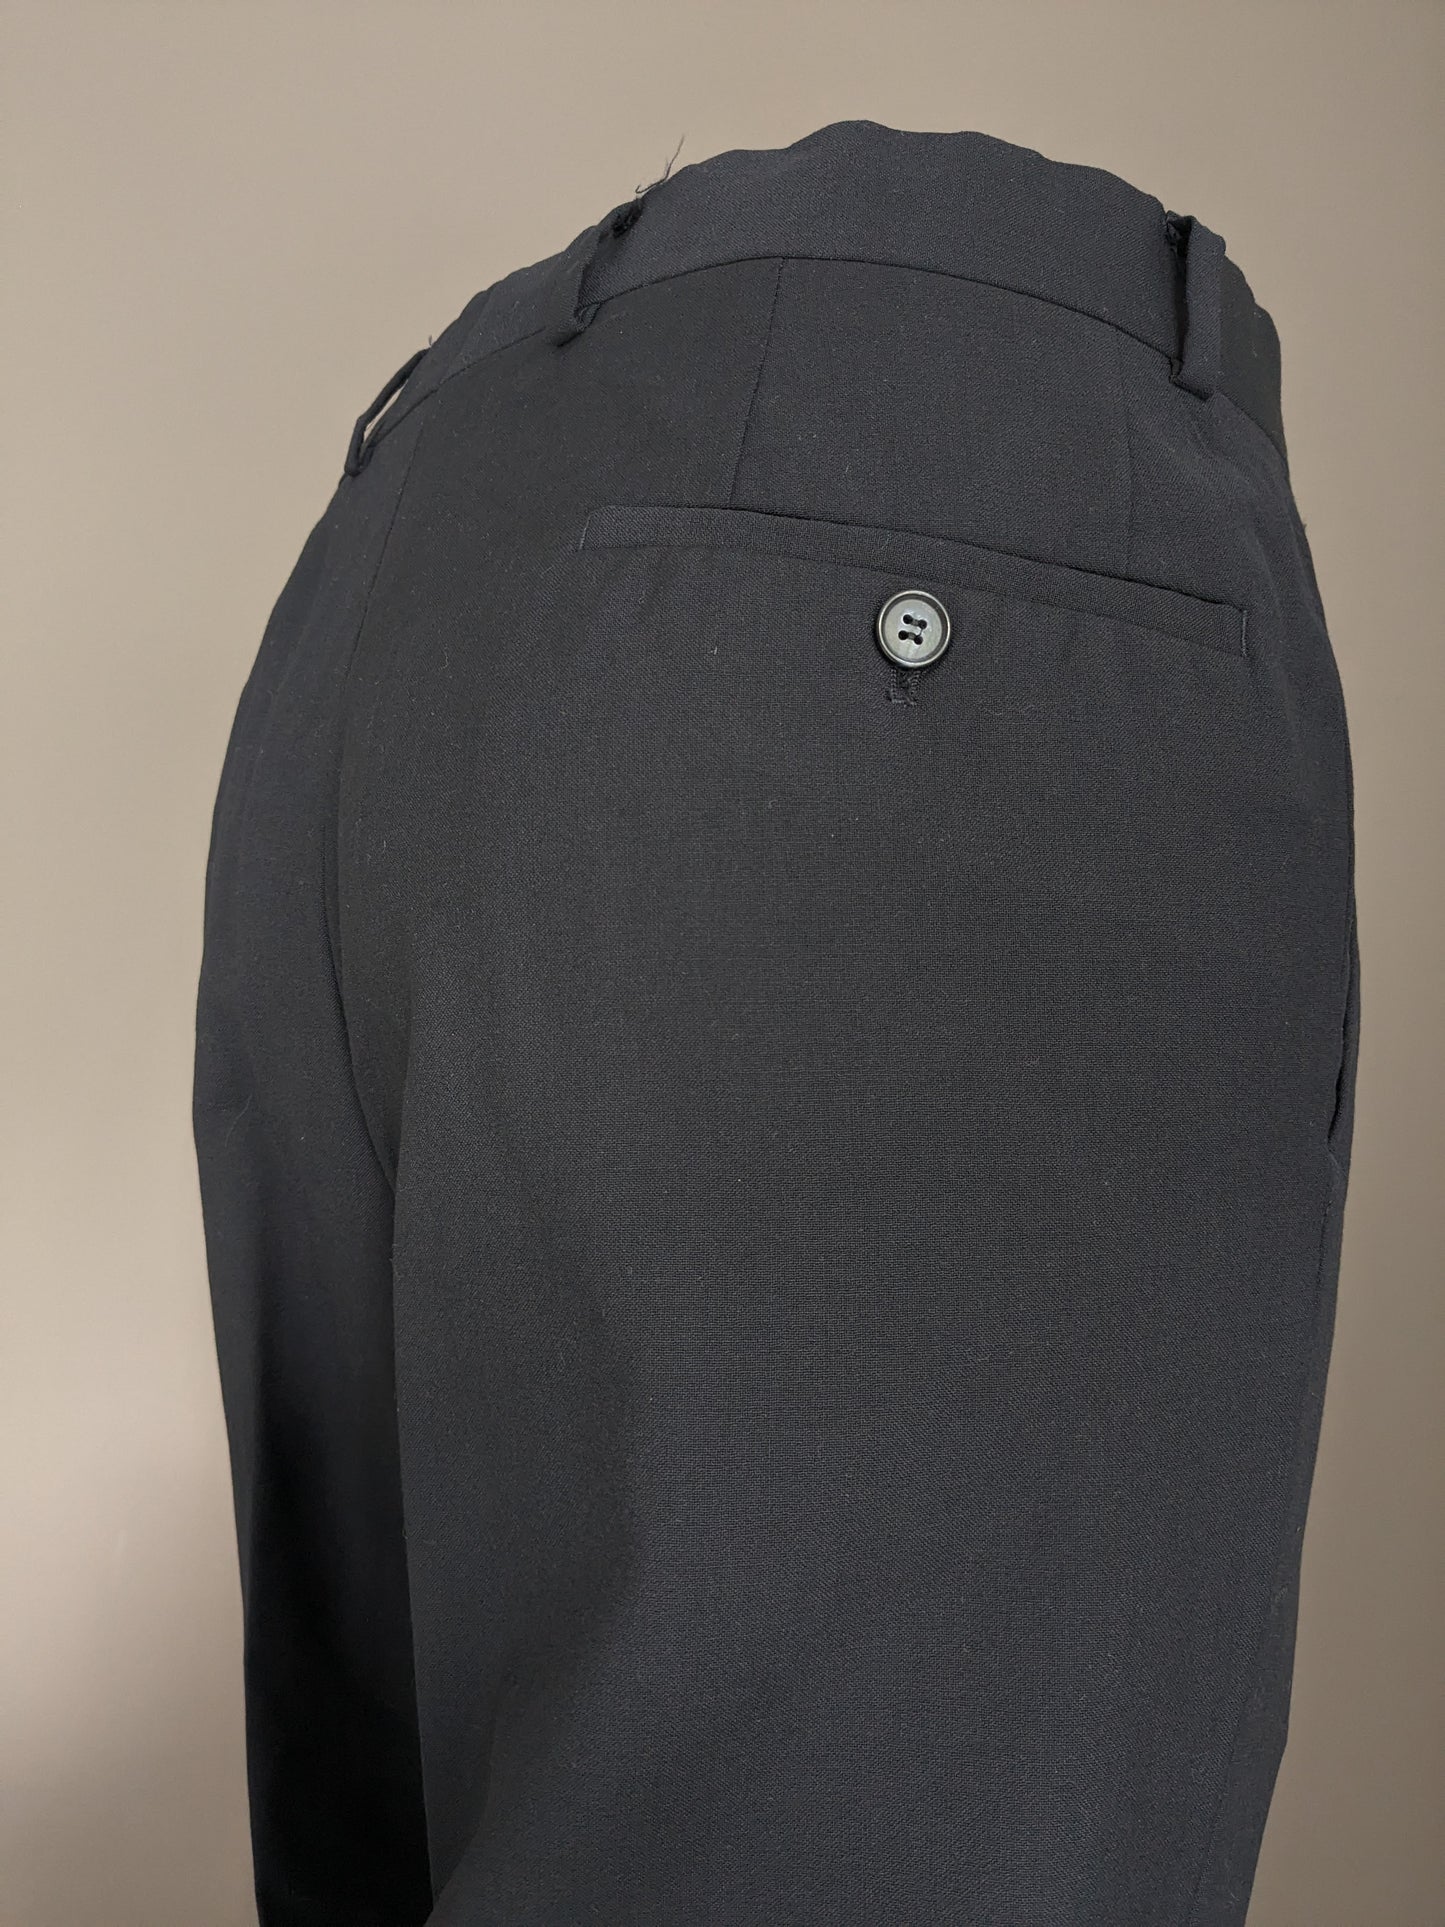 Pantalones de lana con cubierta. Color azul oscuro. Tamaño 52 / L. #500.